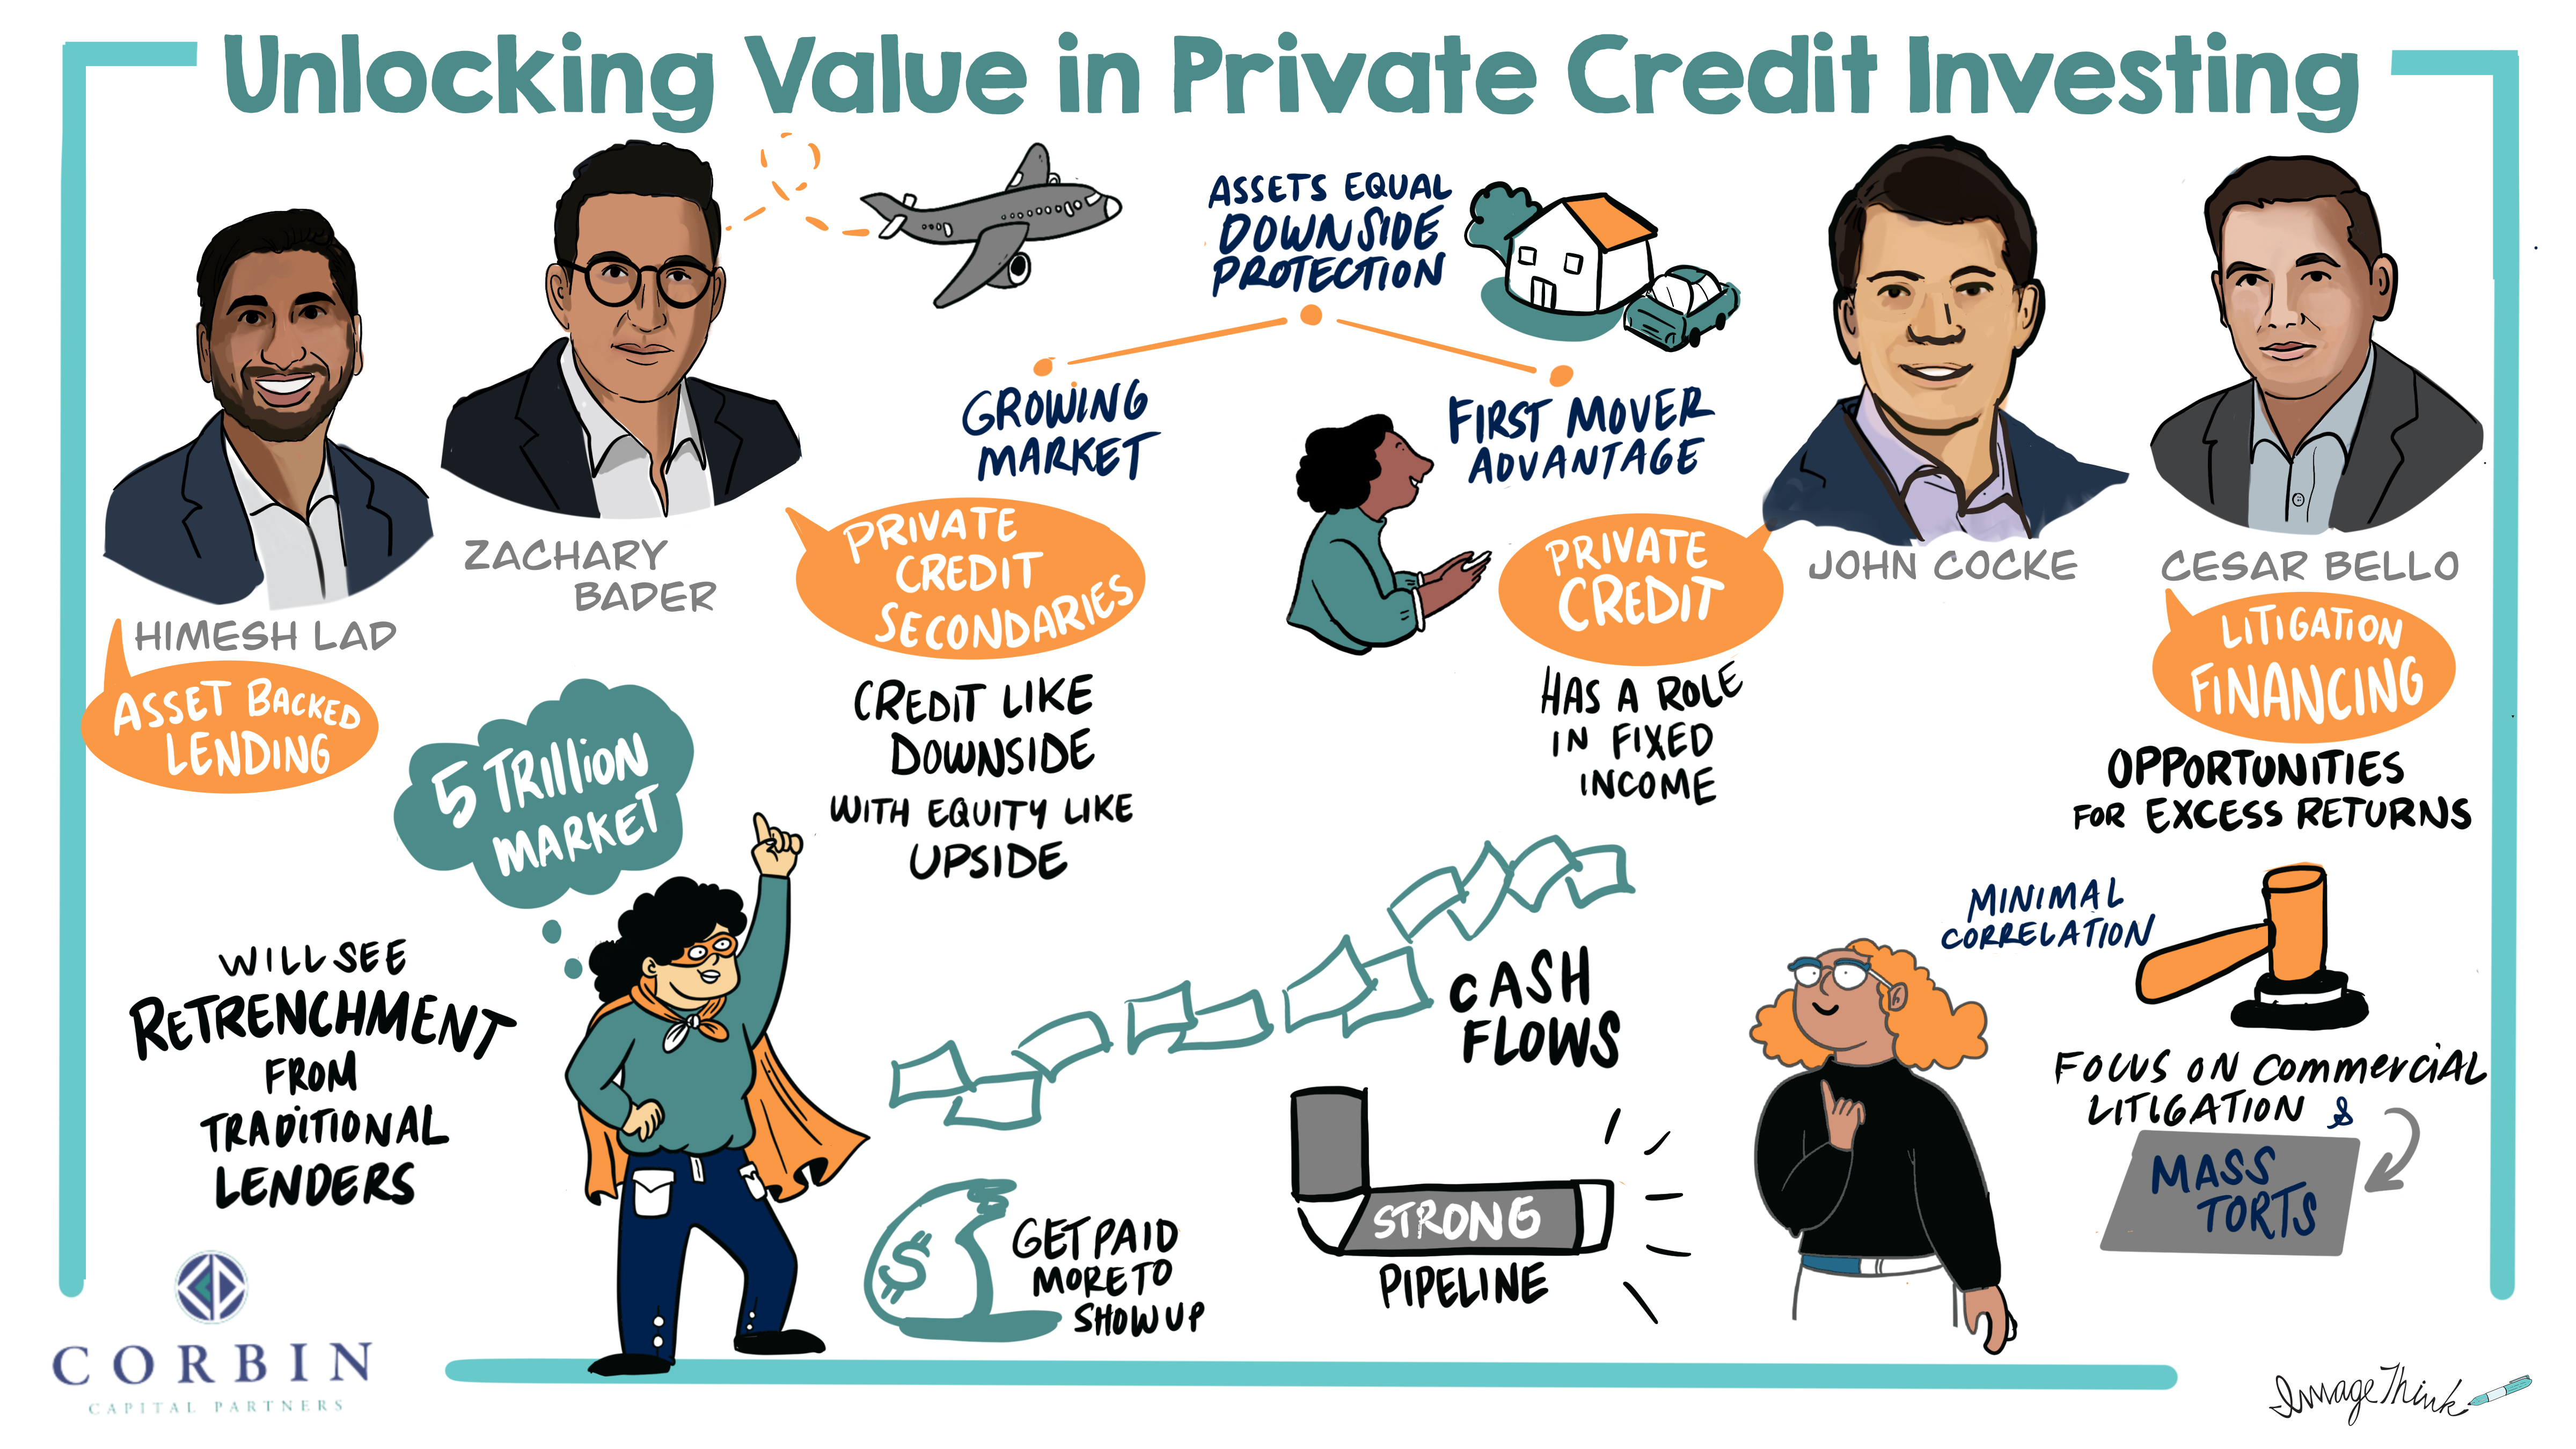 Unlocking Value in Private Credit Investing